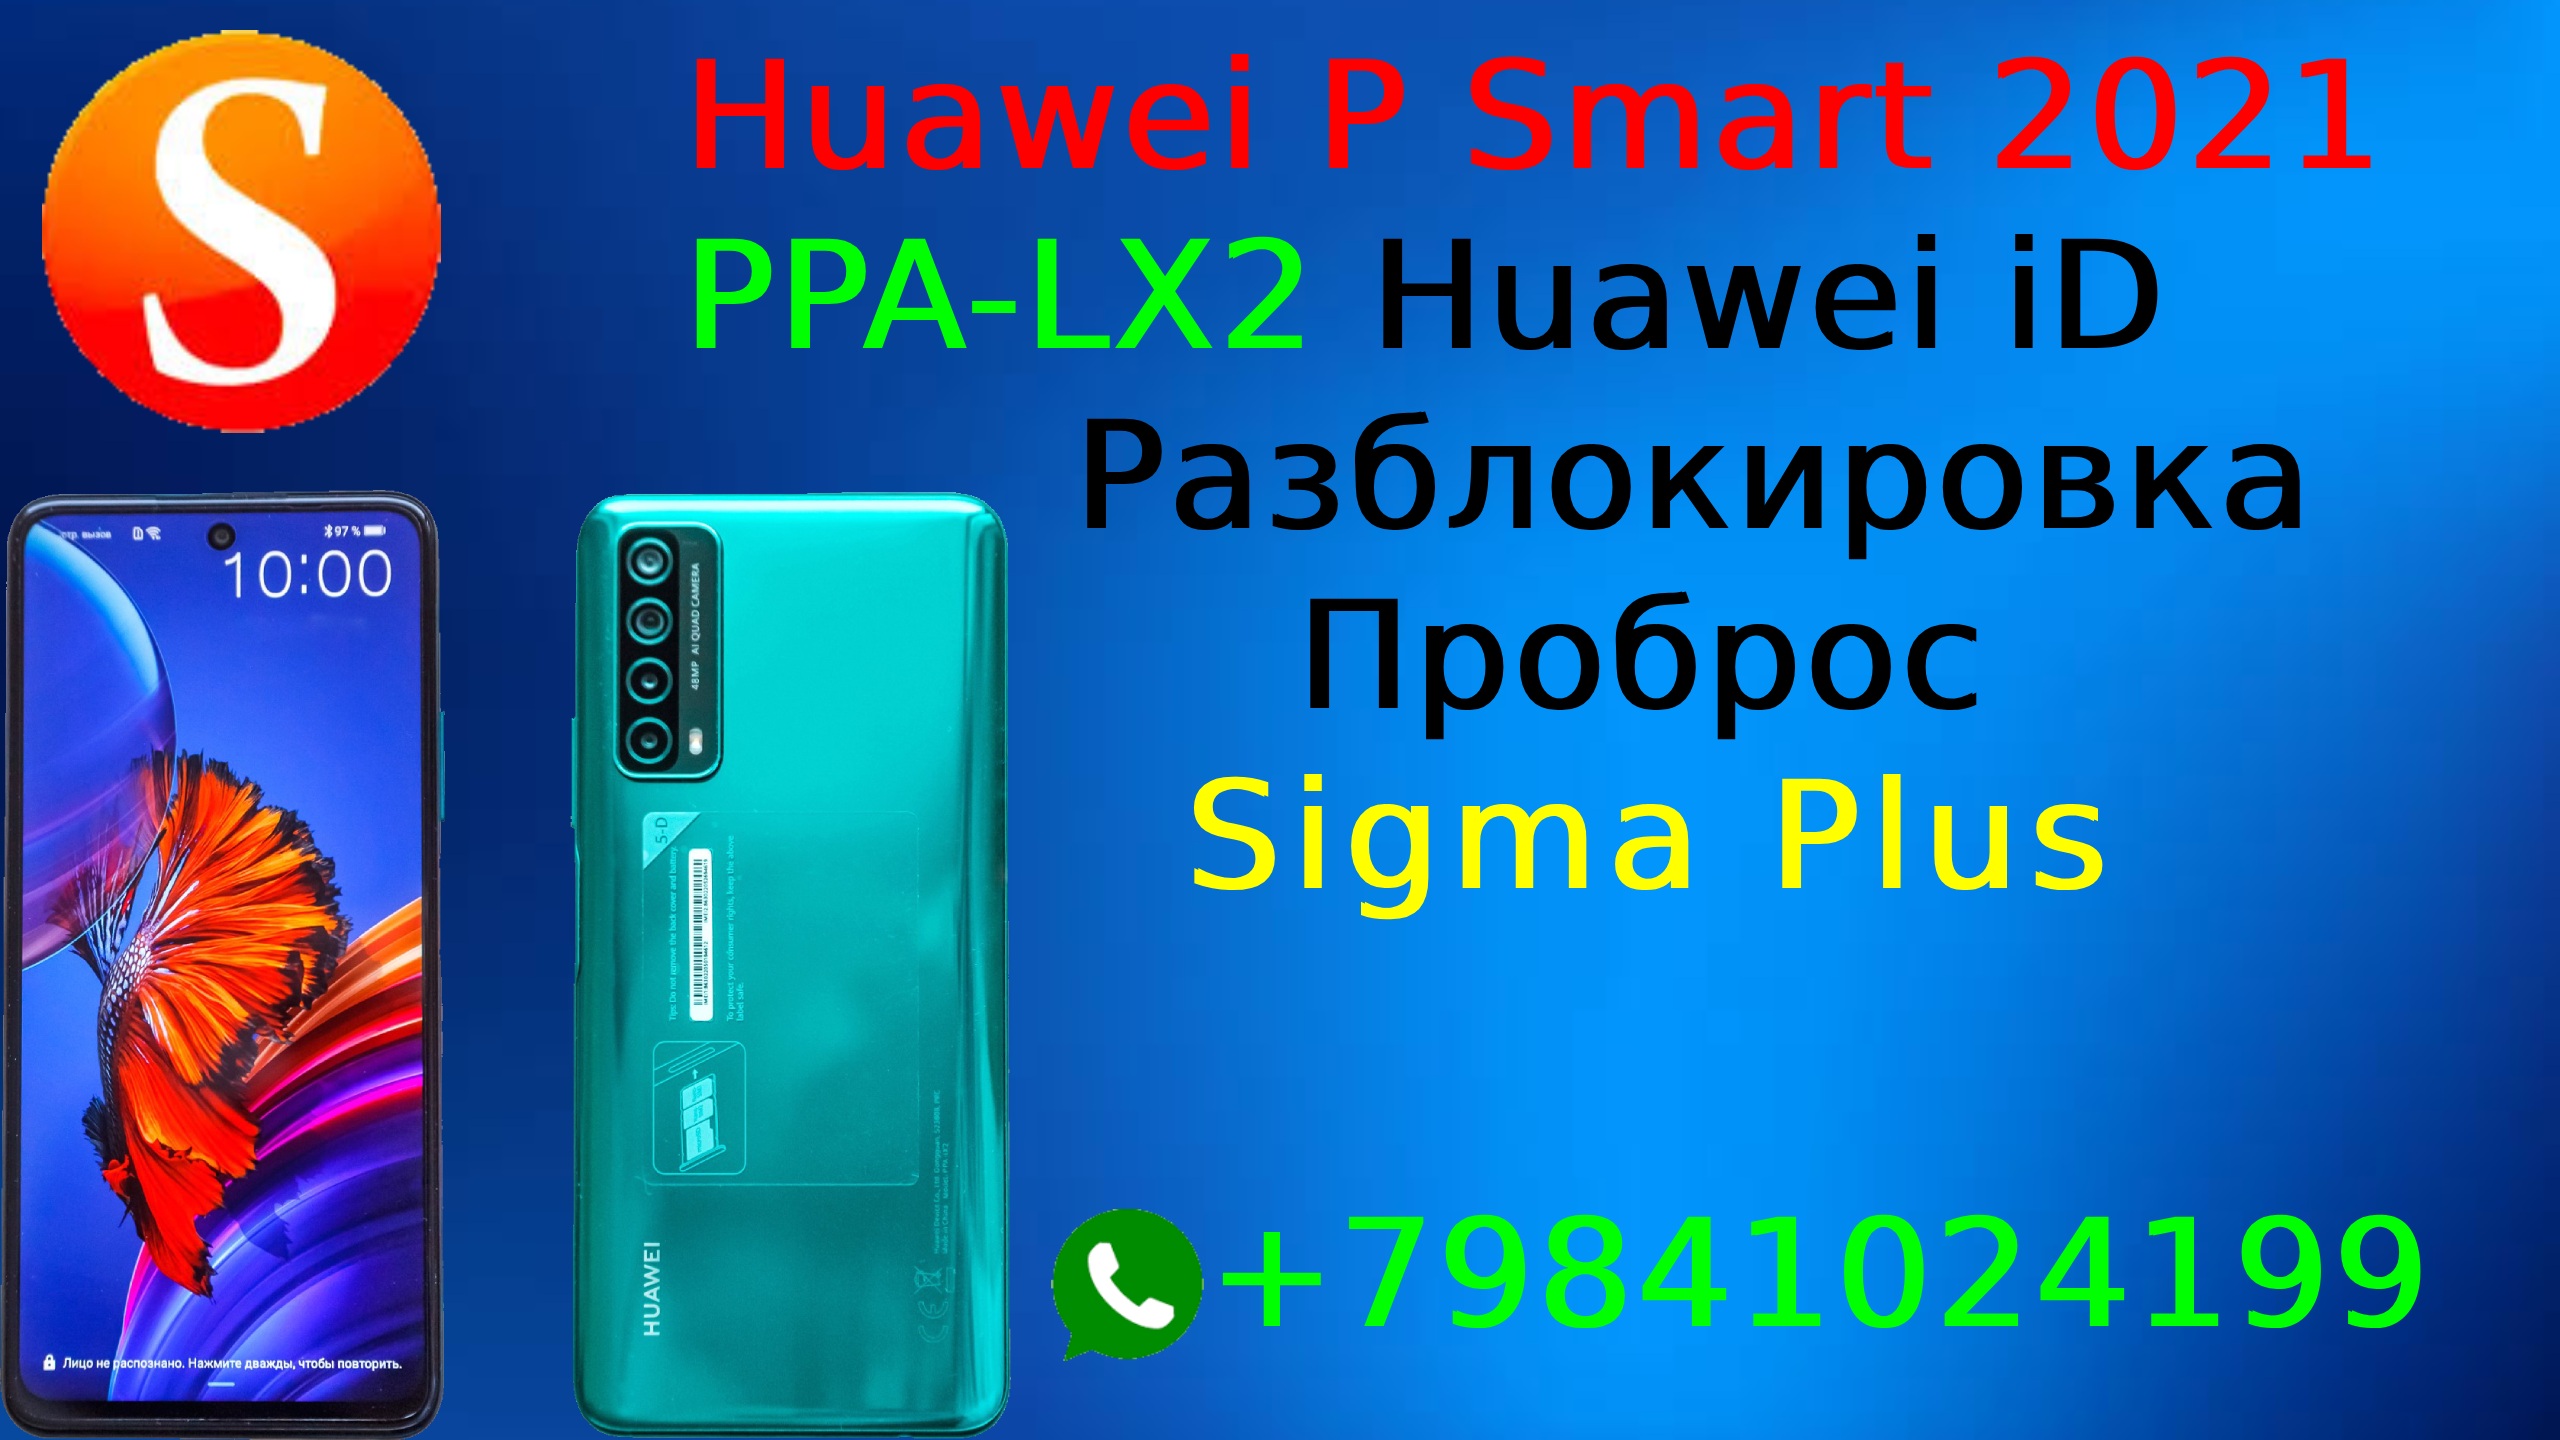 SigmaPlus Huawei P Smart 2021 PPA-LX2 Разблокировка Huawei ID Дистационно!